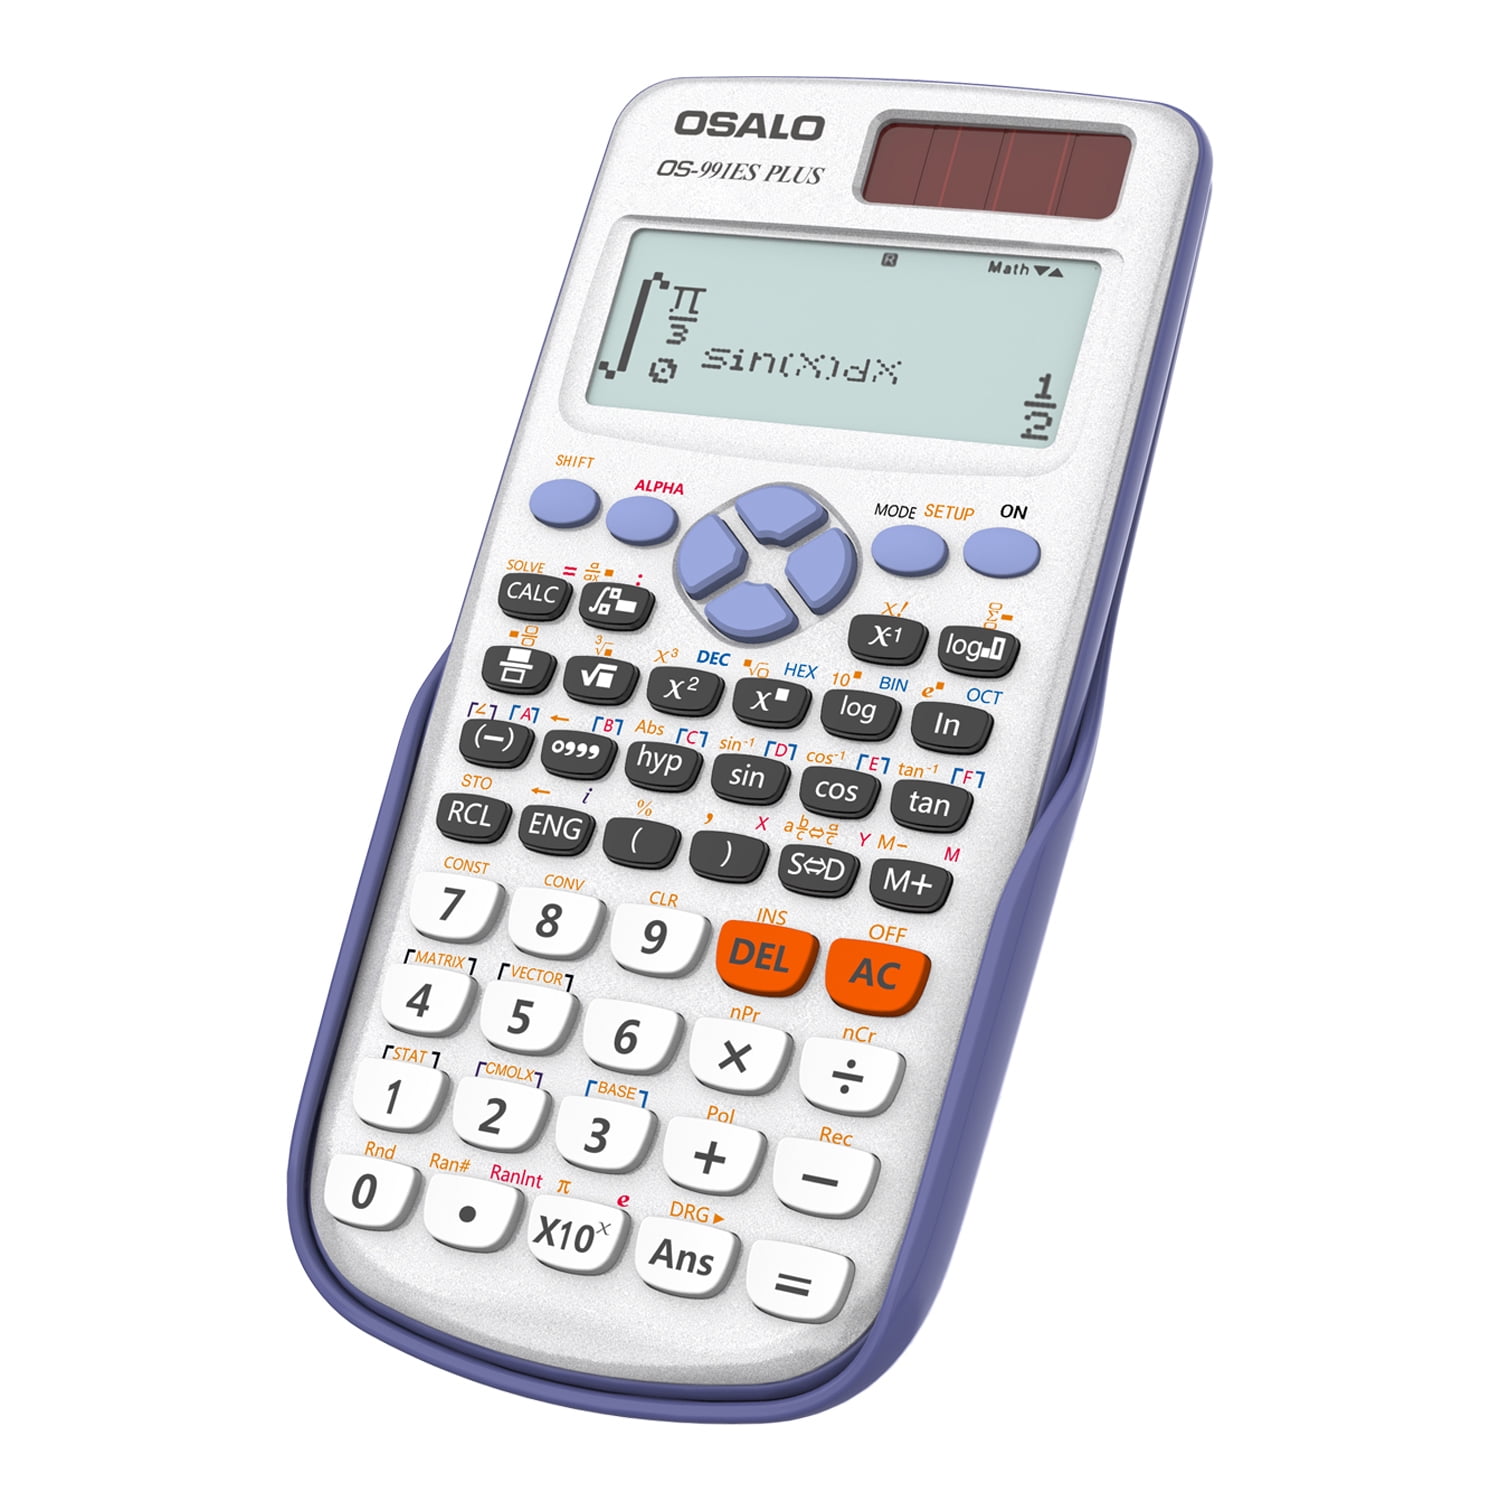  Casio Fx-570Es Plus 2 Scientific Calculator with 417  Functions, Black : Office Products